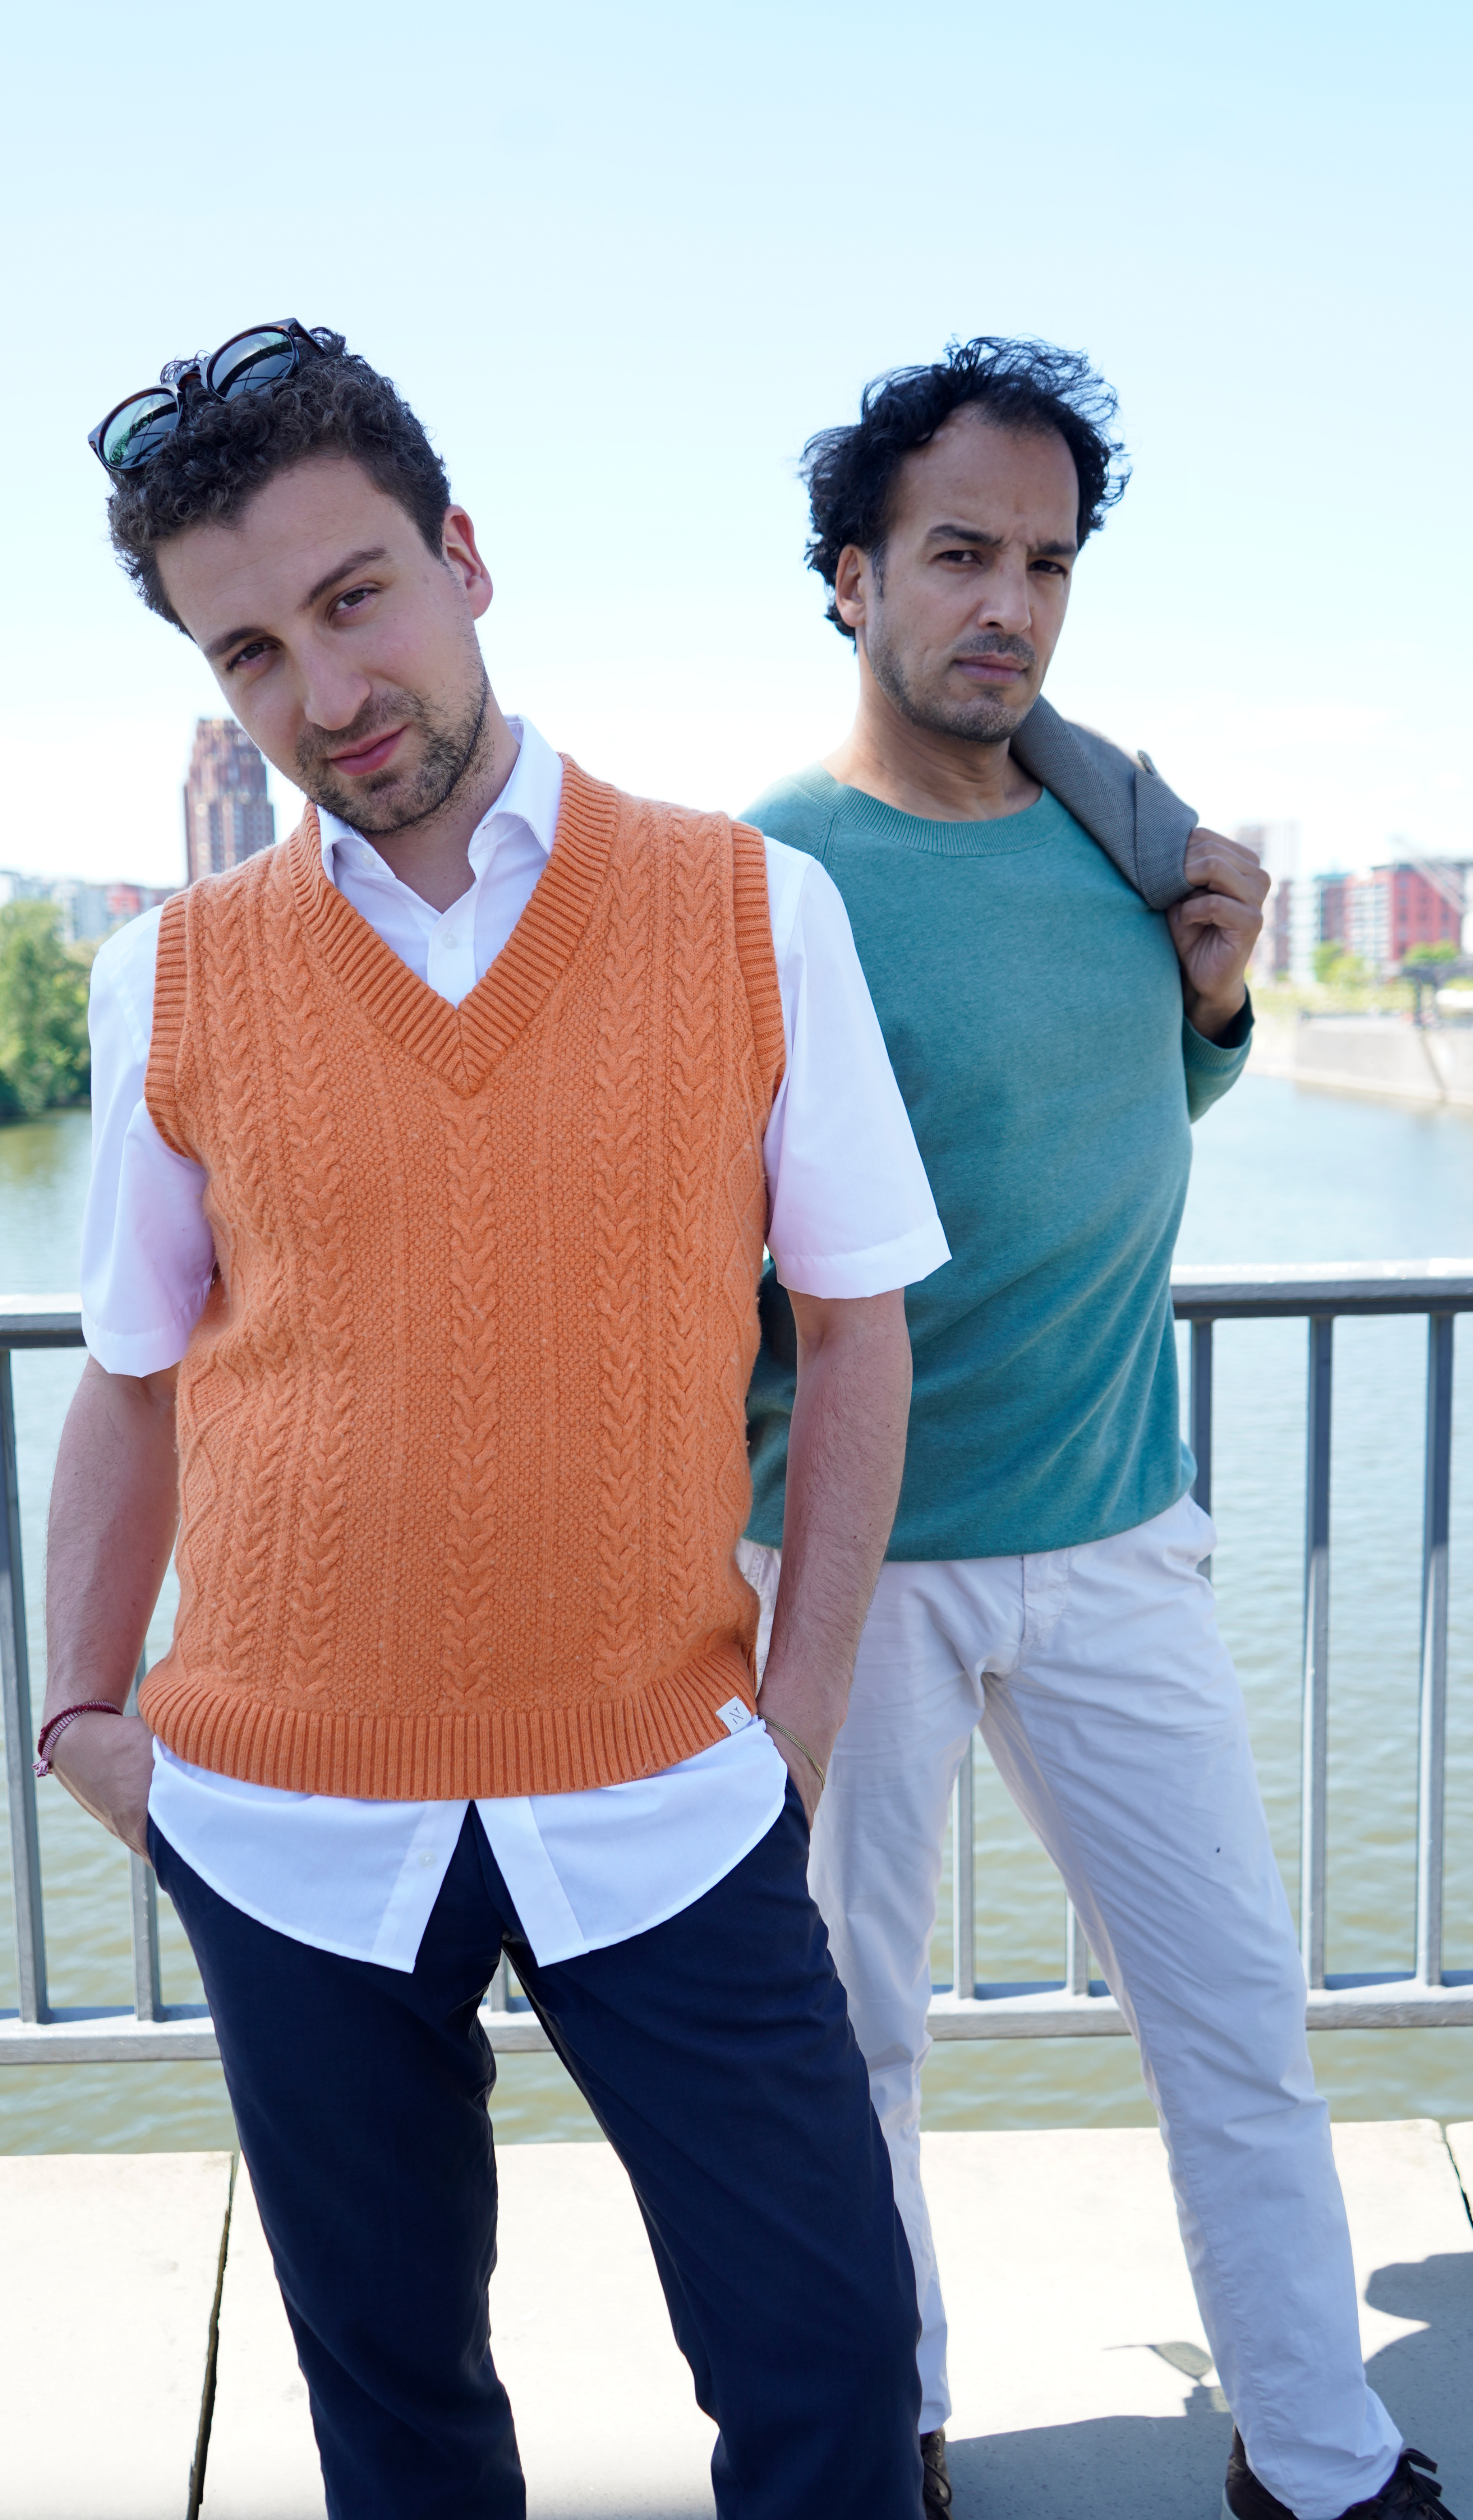 Phliéas Laoutides und Laid Bouzid und tragen Secondhand-Outfits aus dem Oxfam Shop Frankfurt-Sachsenhausen.